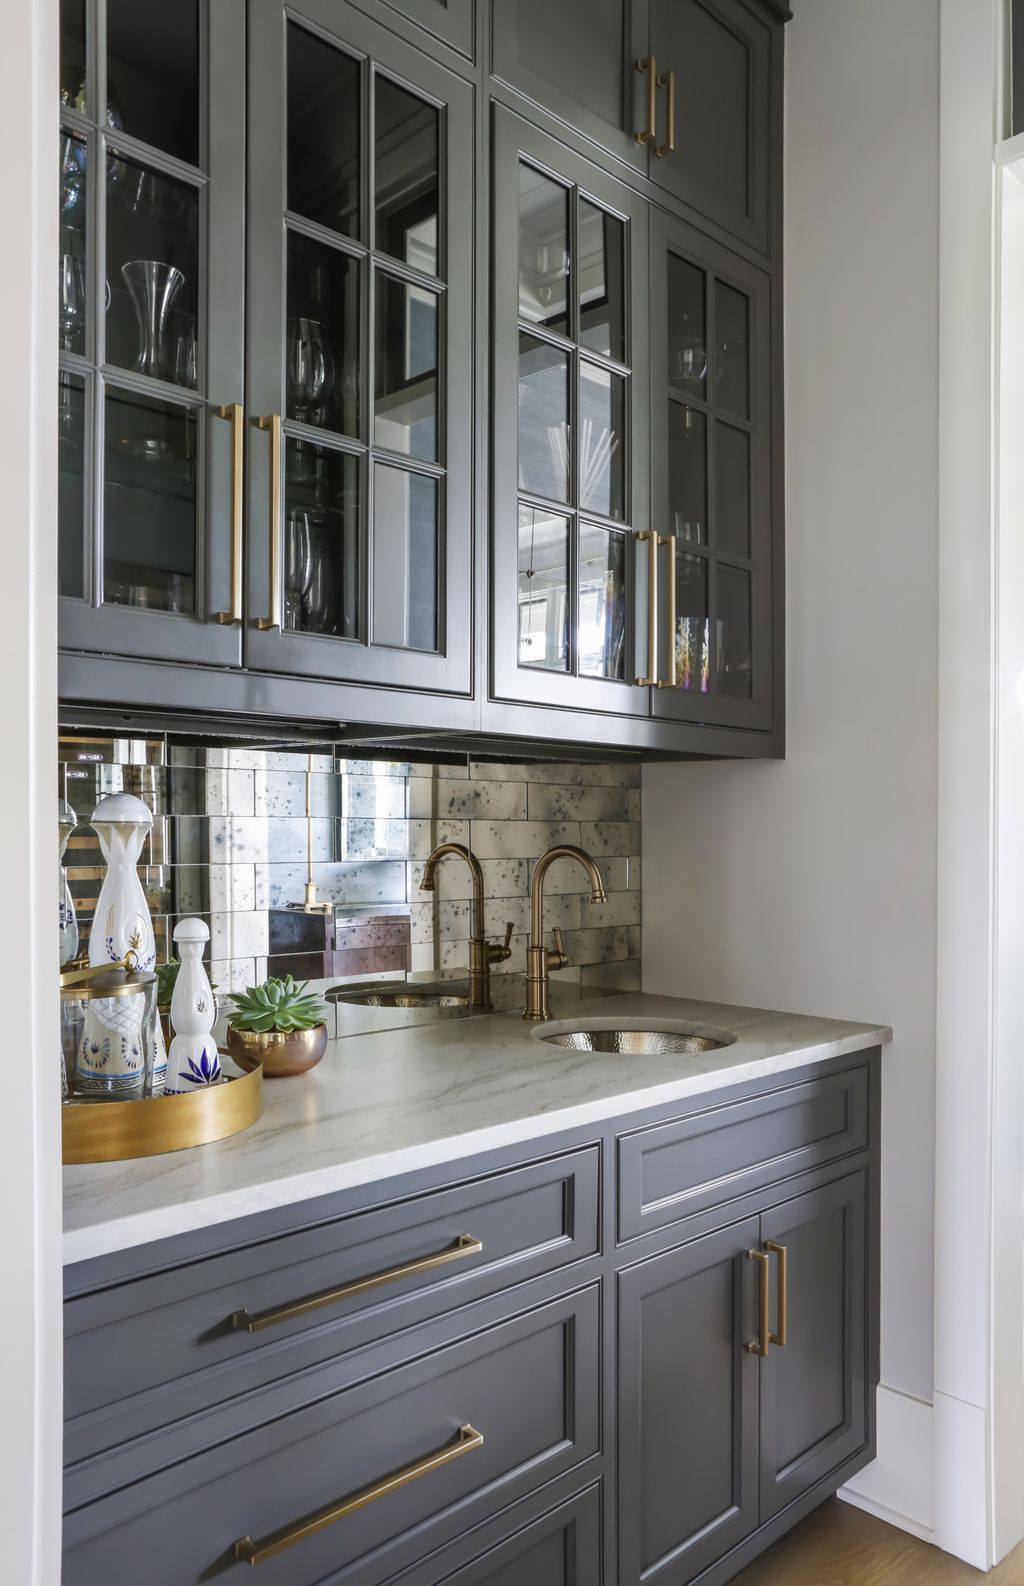 8 pantry color ideas – the 'it' tones for kitchen storage | Livingetc